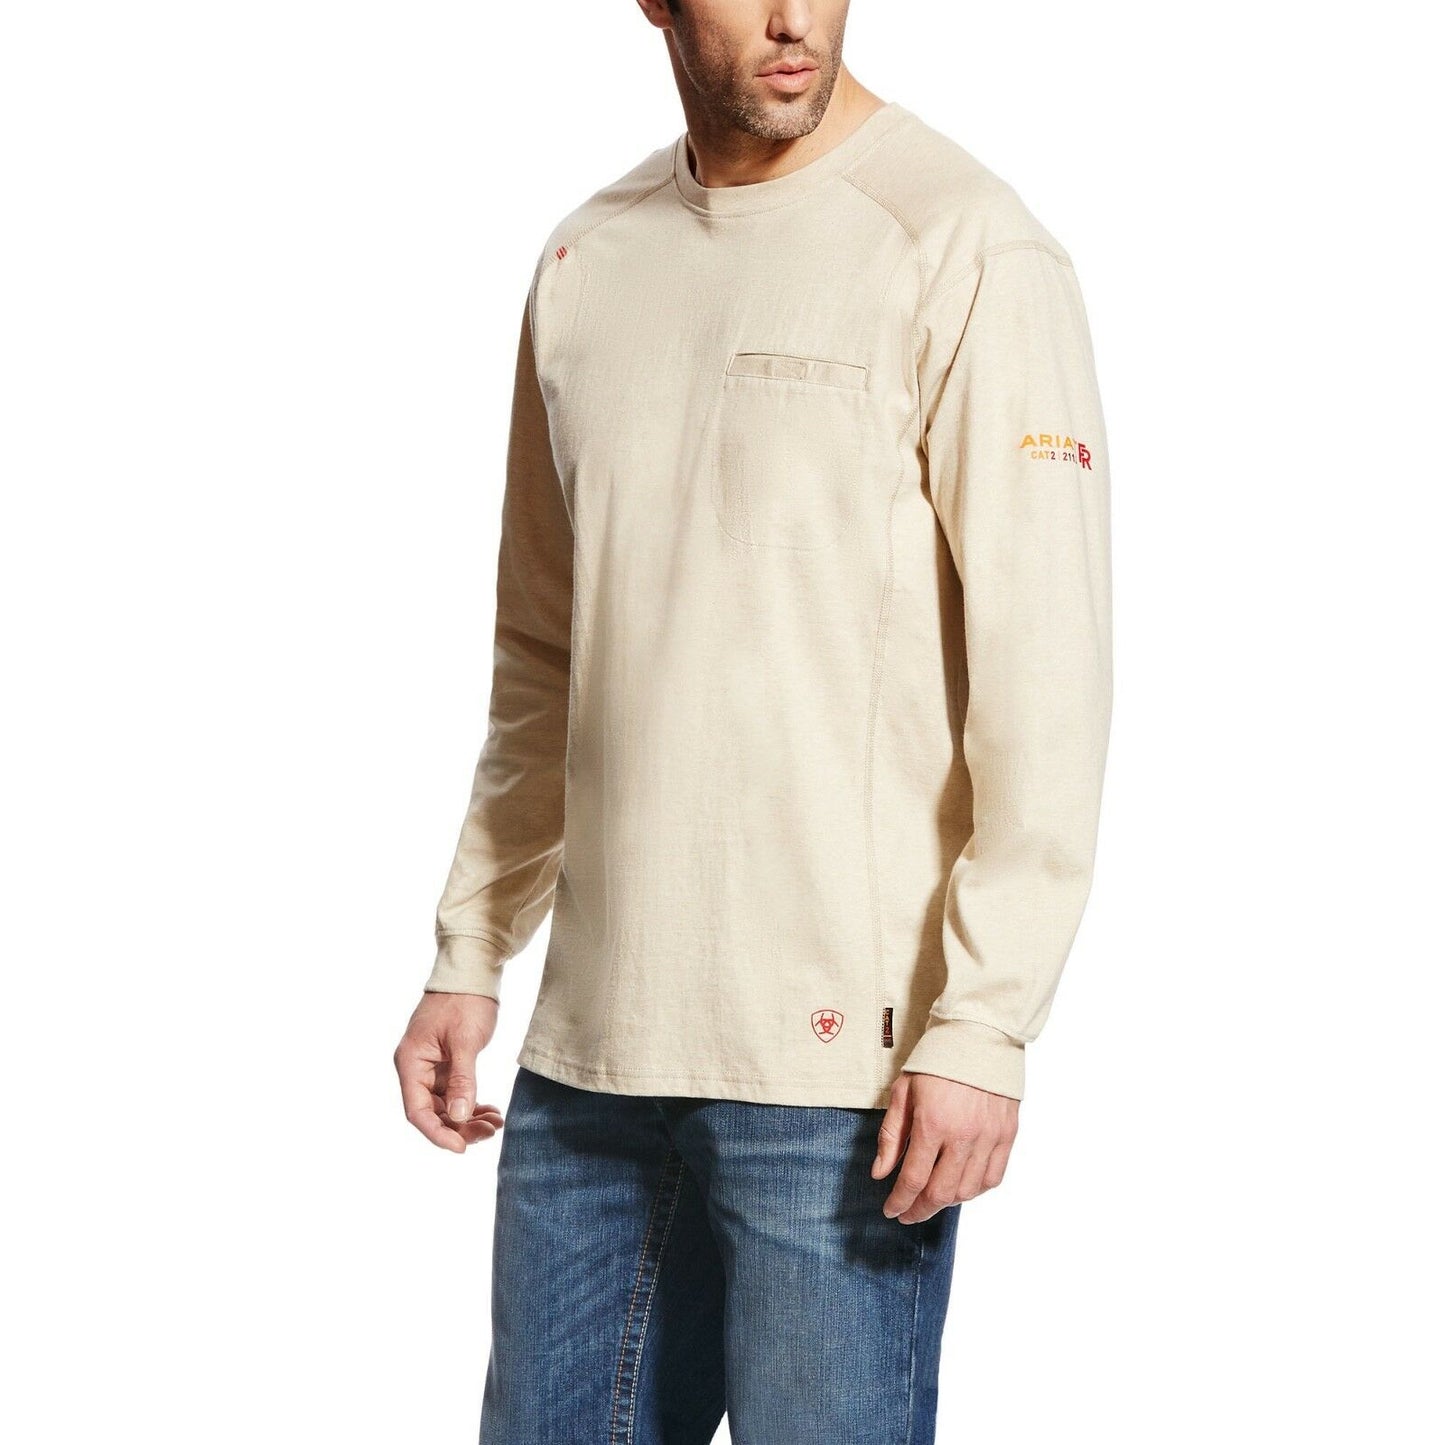 Ariat® Men's FR Air Crew Sand Heather Long Sleeve T-Shirt 10022328